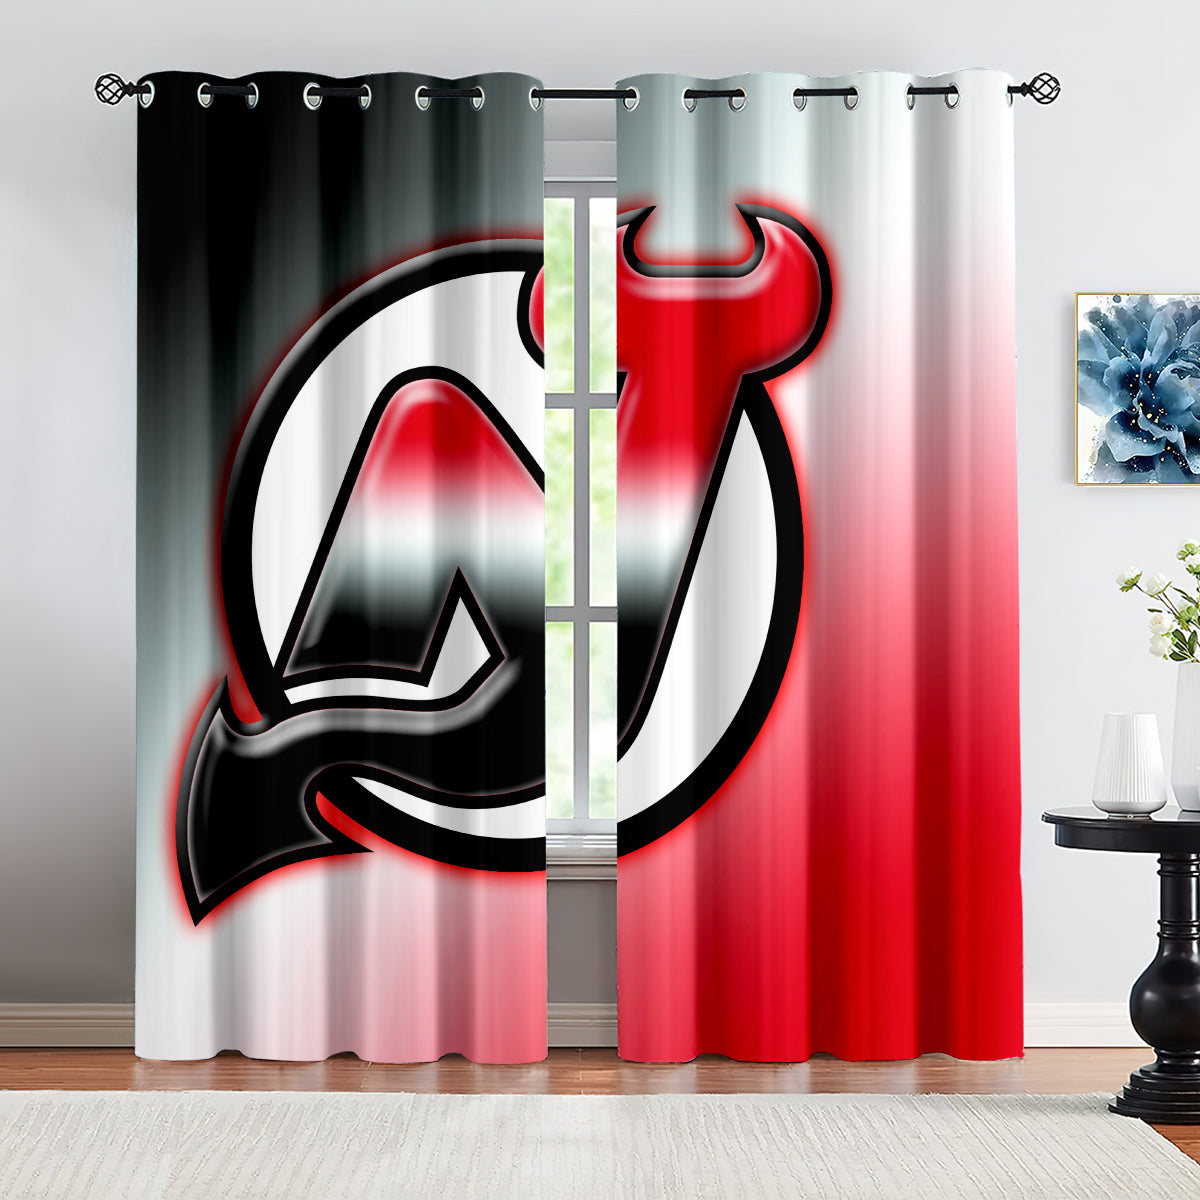 New Jersey Devils Hockey League Blackout Curtains Drapes For Window Treatment Set